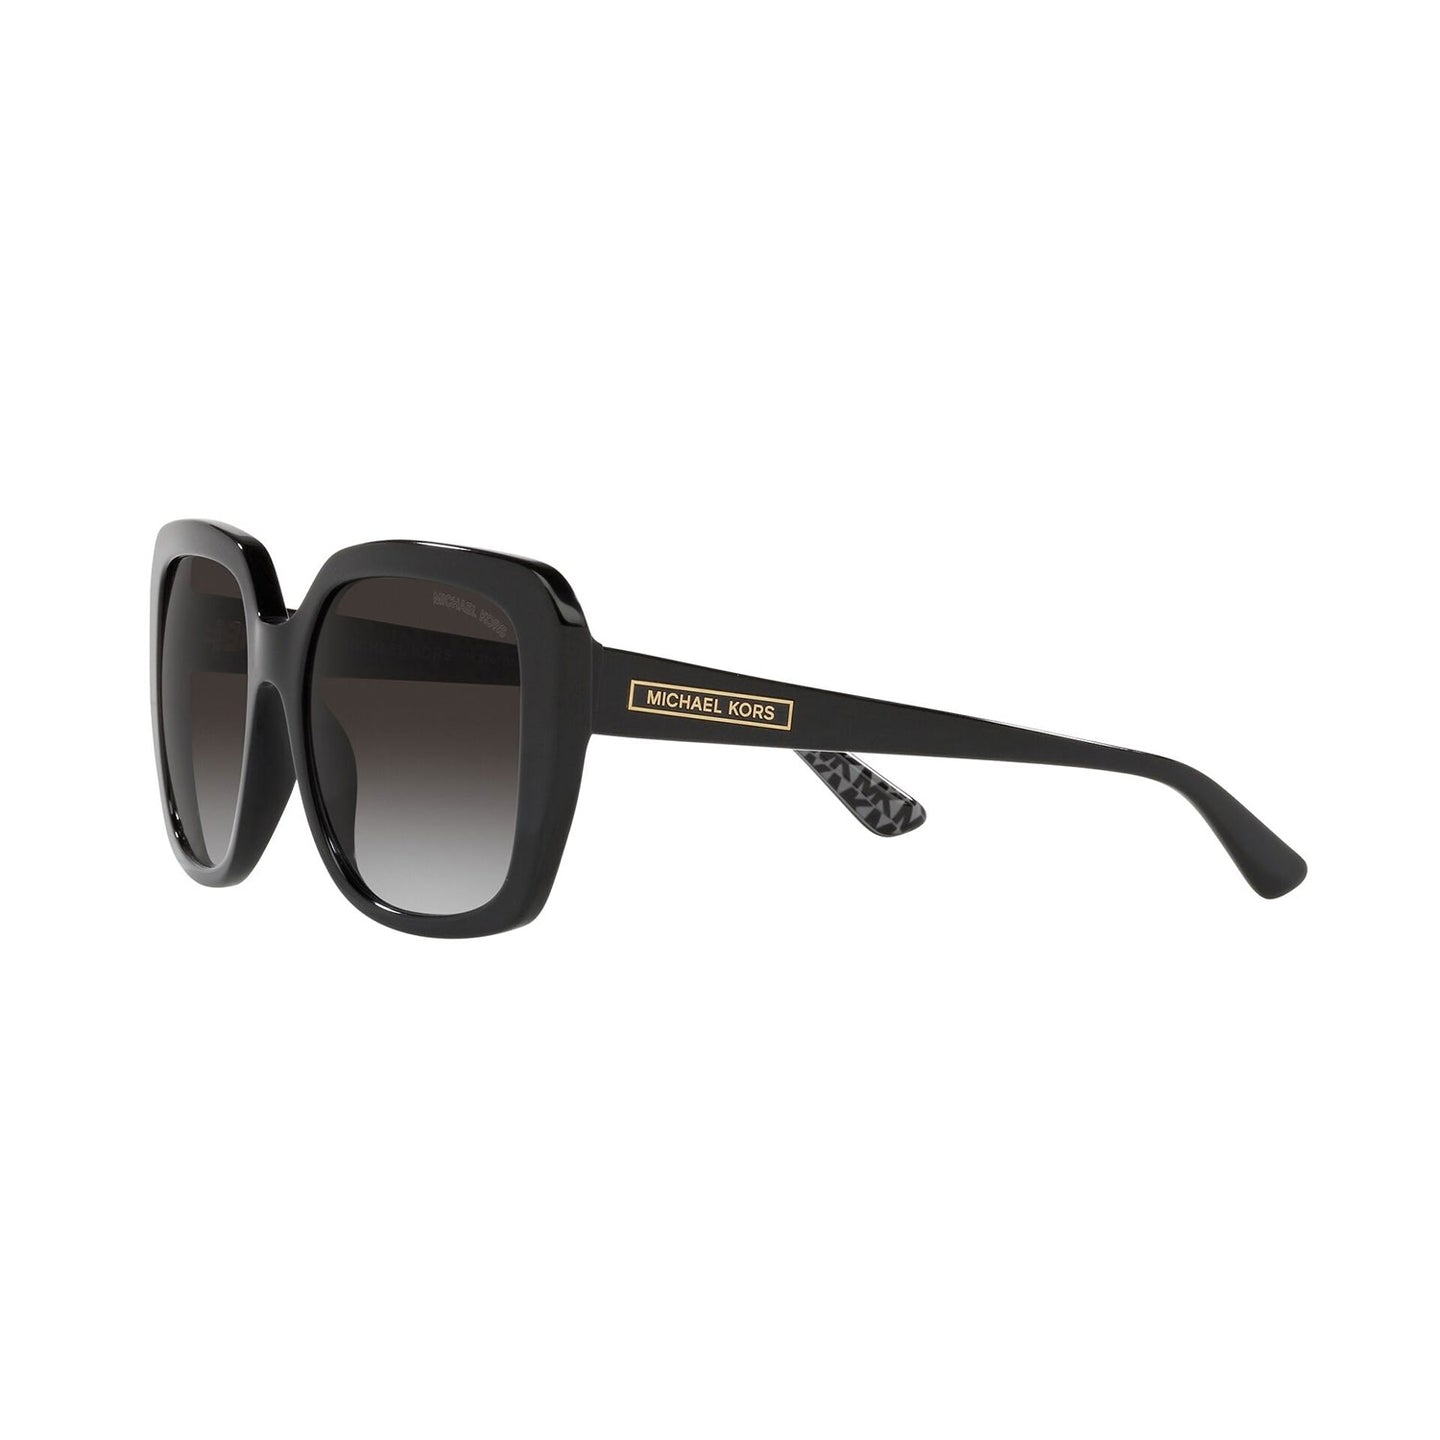 sunglasses michael kors model mk 2140 color 30058g black